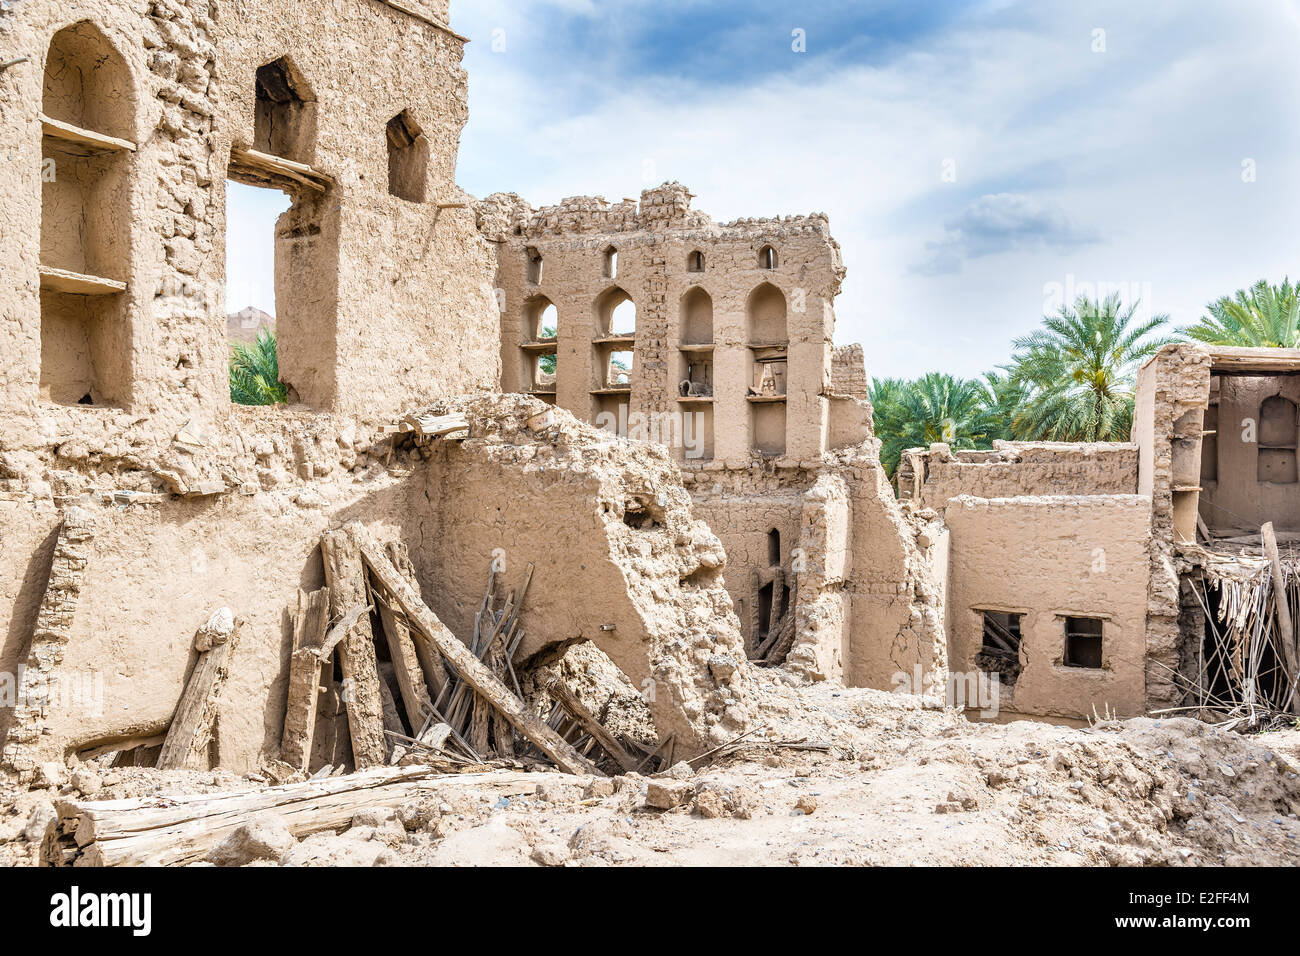 Droit de ruines dans la région de Birkat al mud en Oman Banque D'Images